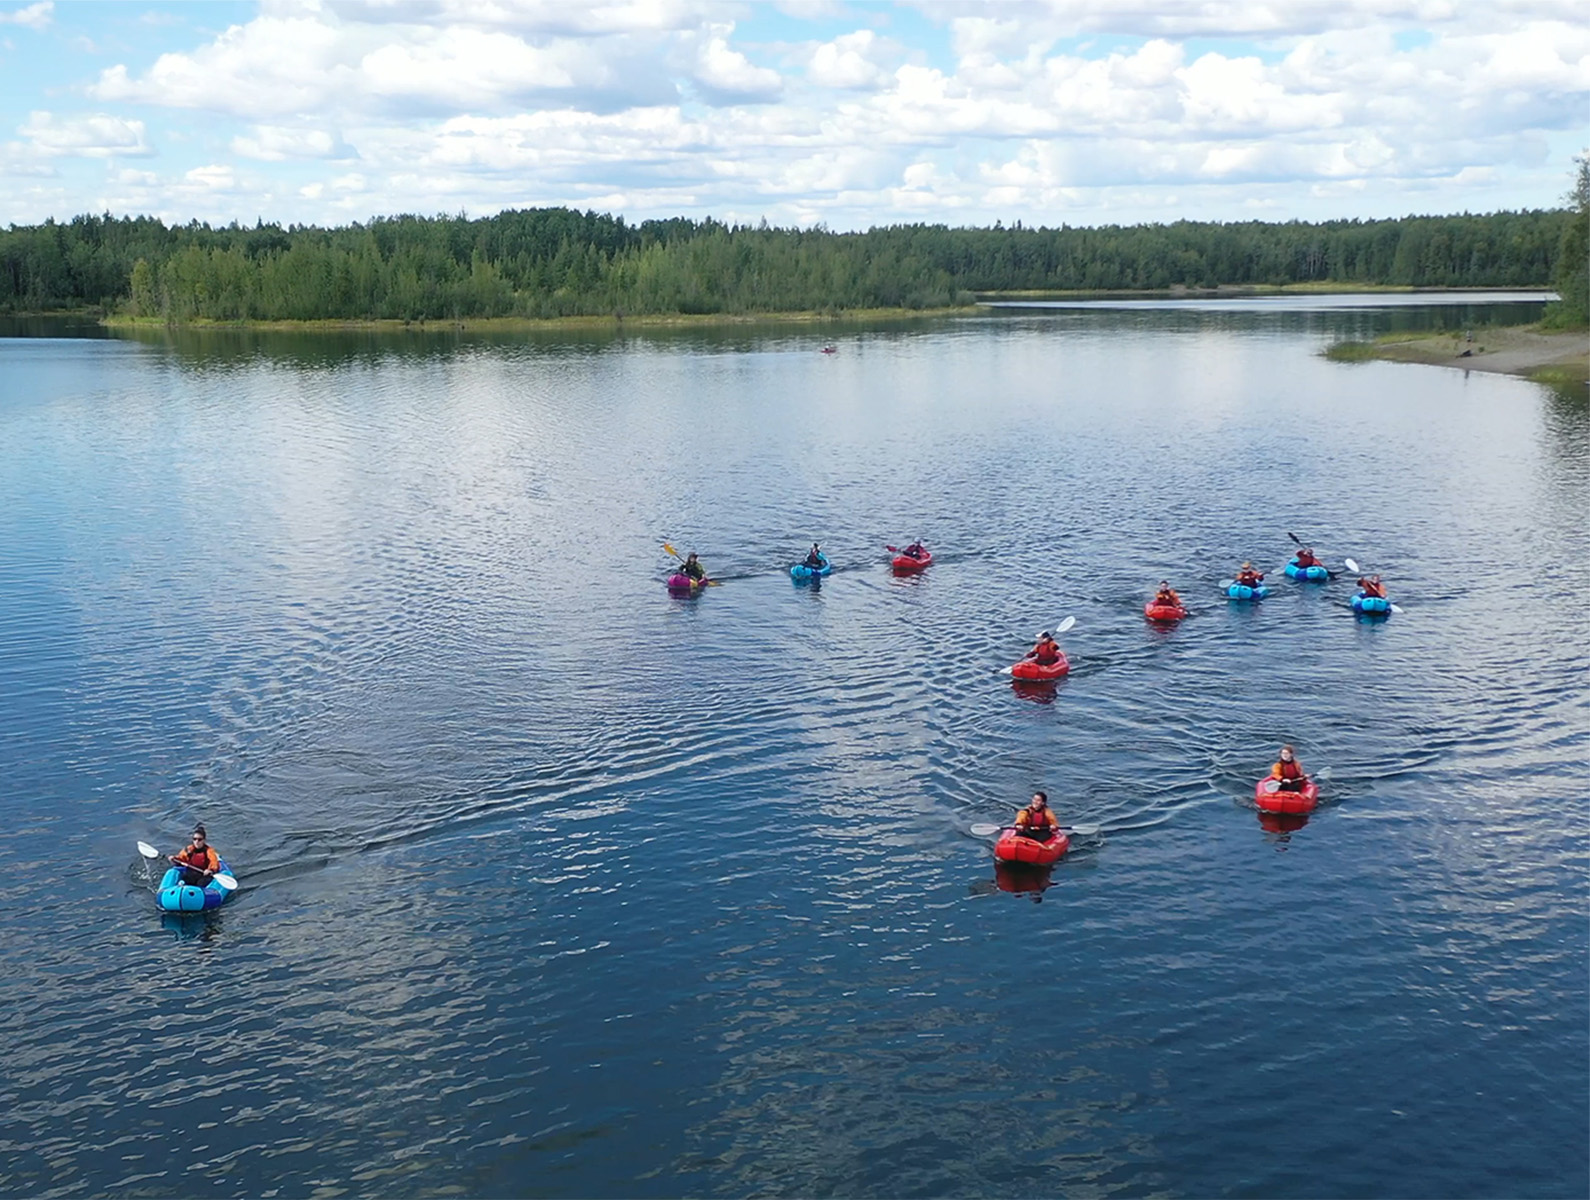 Kayakers paddle on a lake